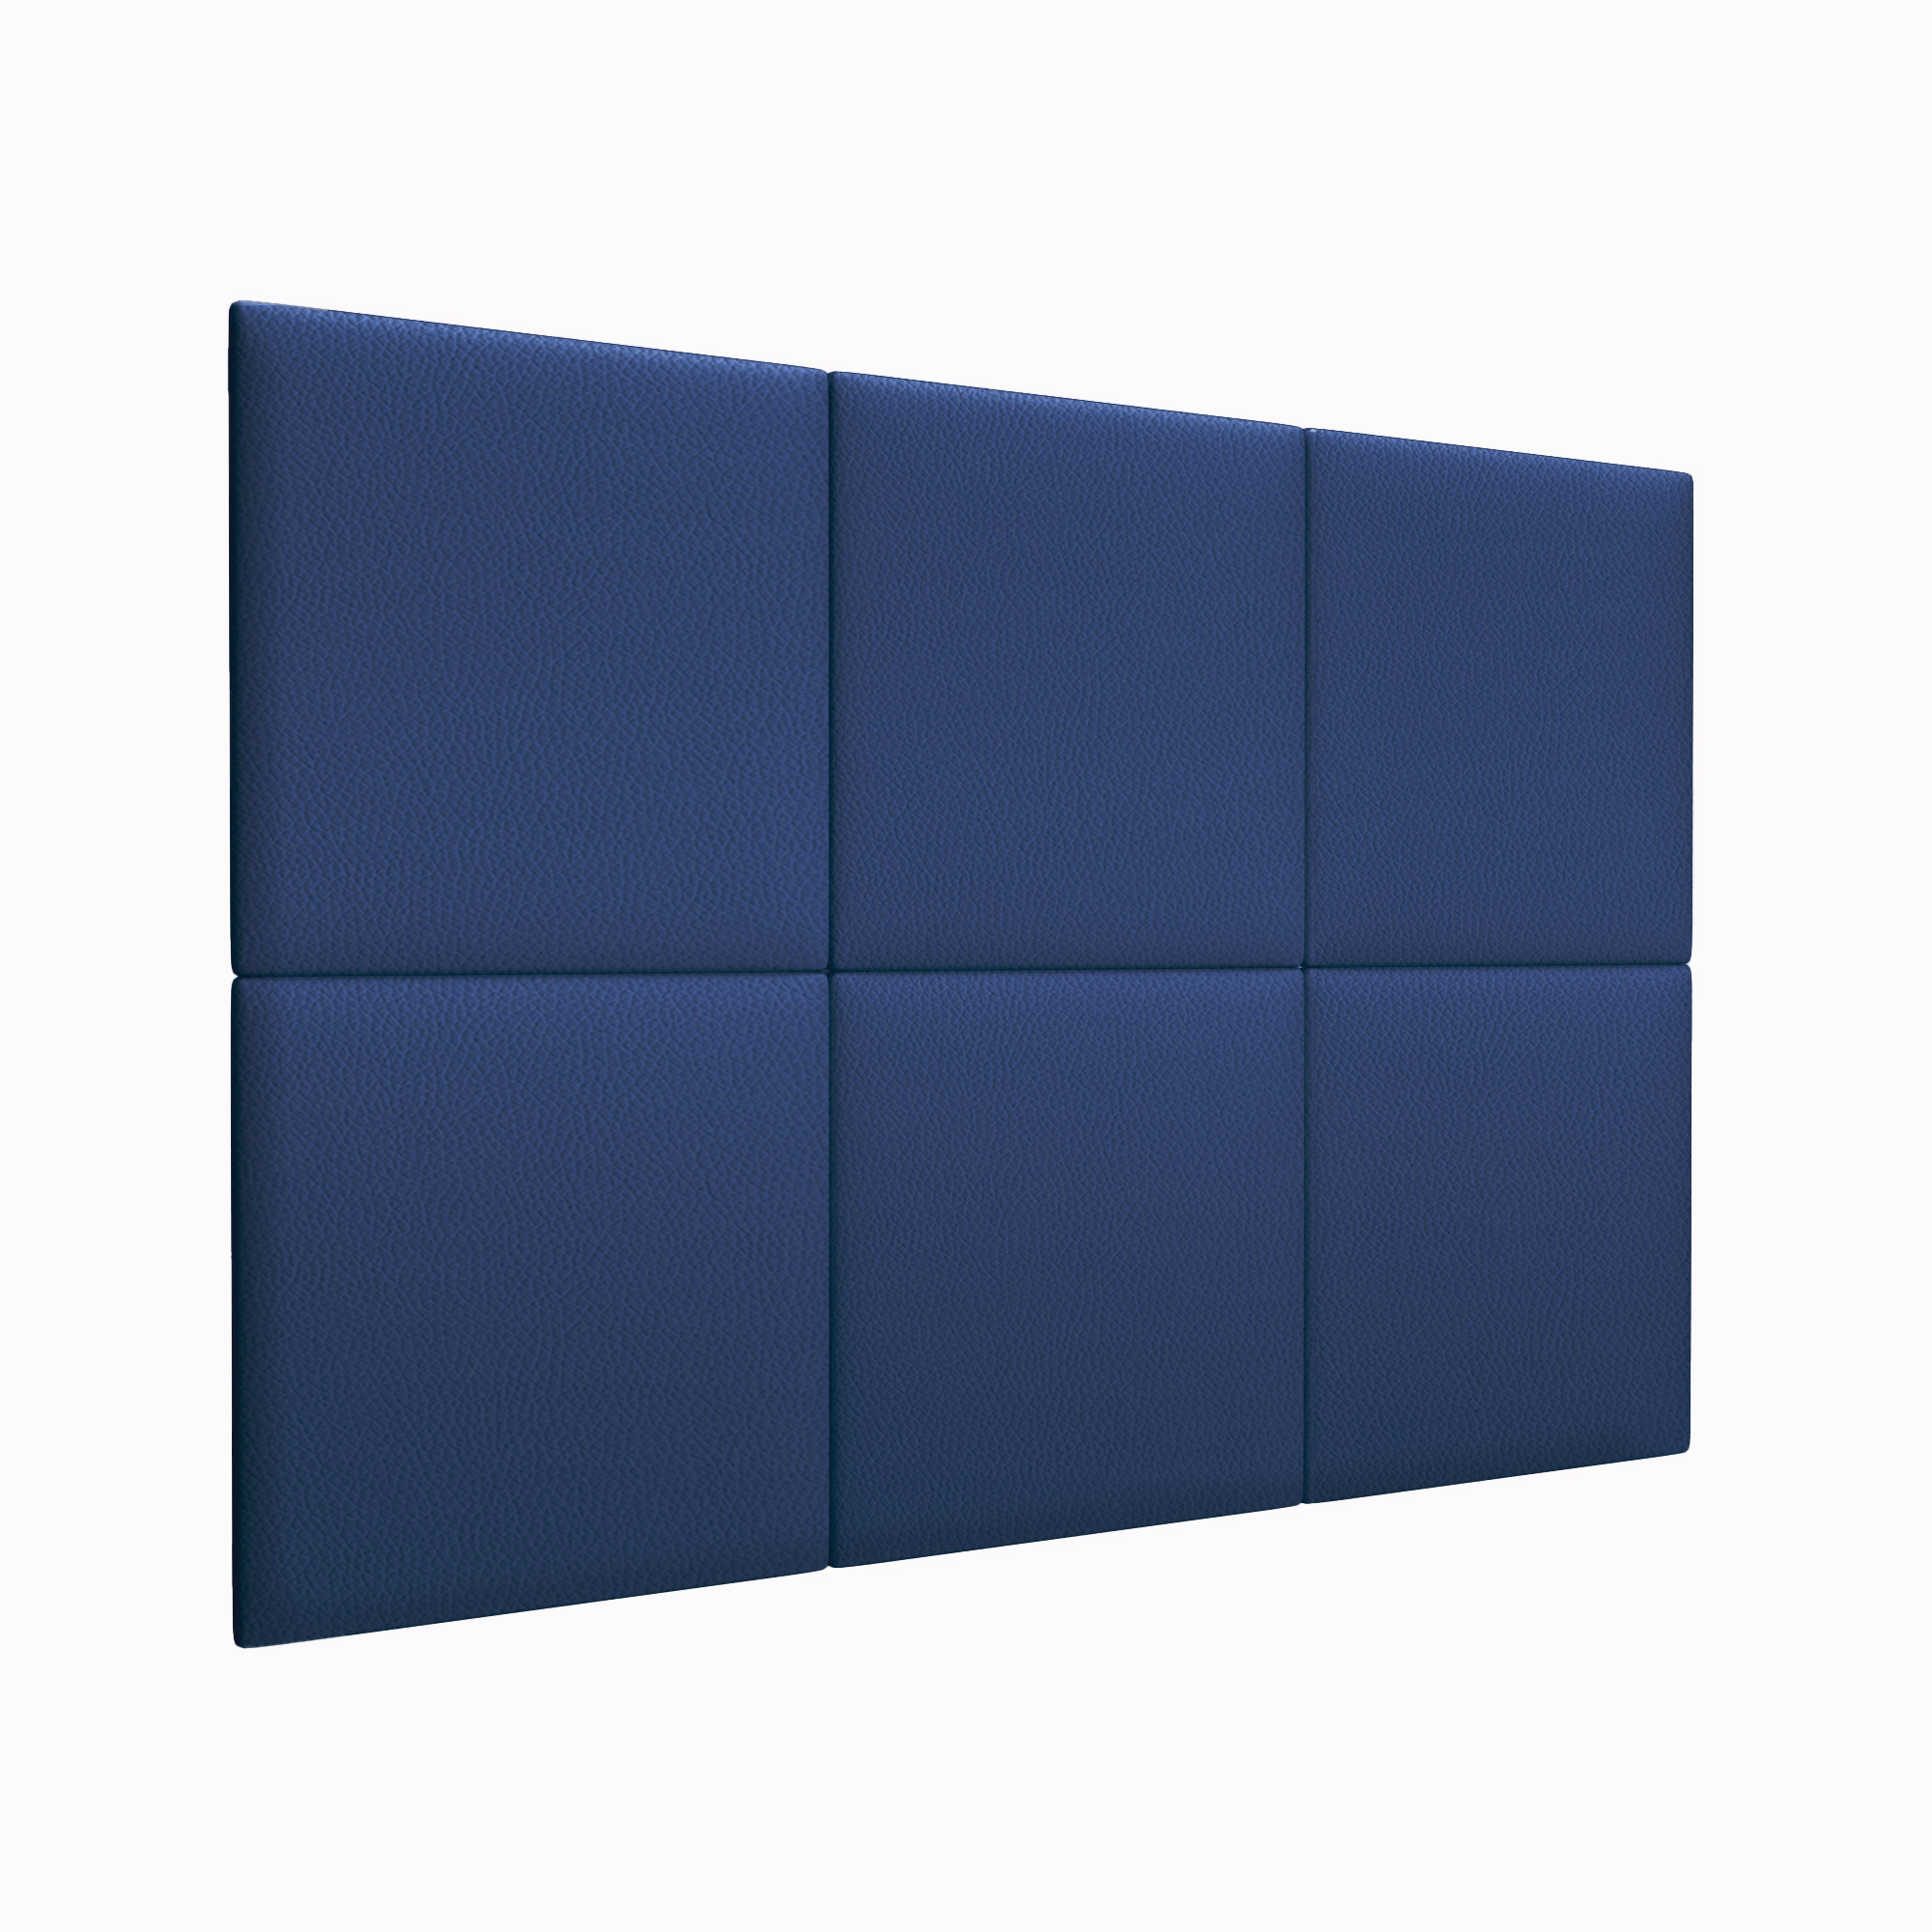 Мягкие стеновые панели Eco Leather Blue 50х50 см 2 шт.